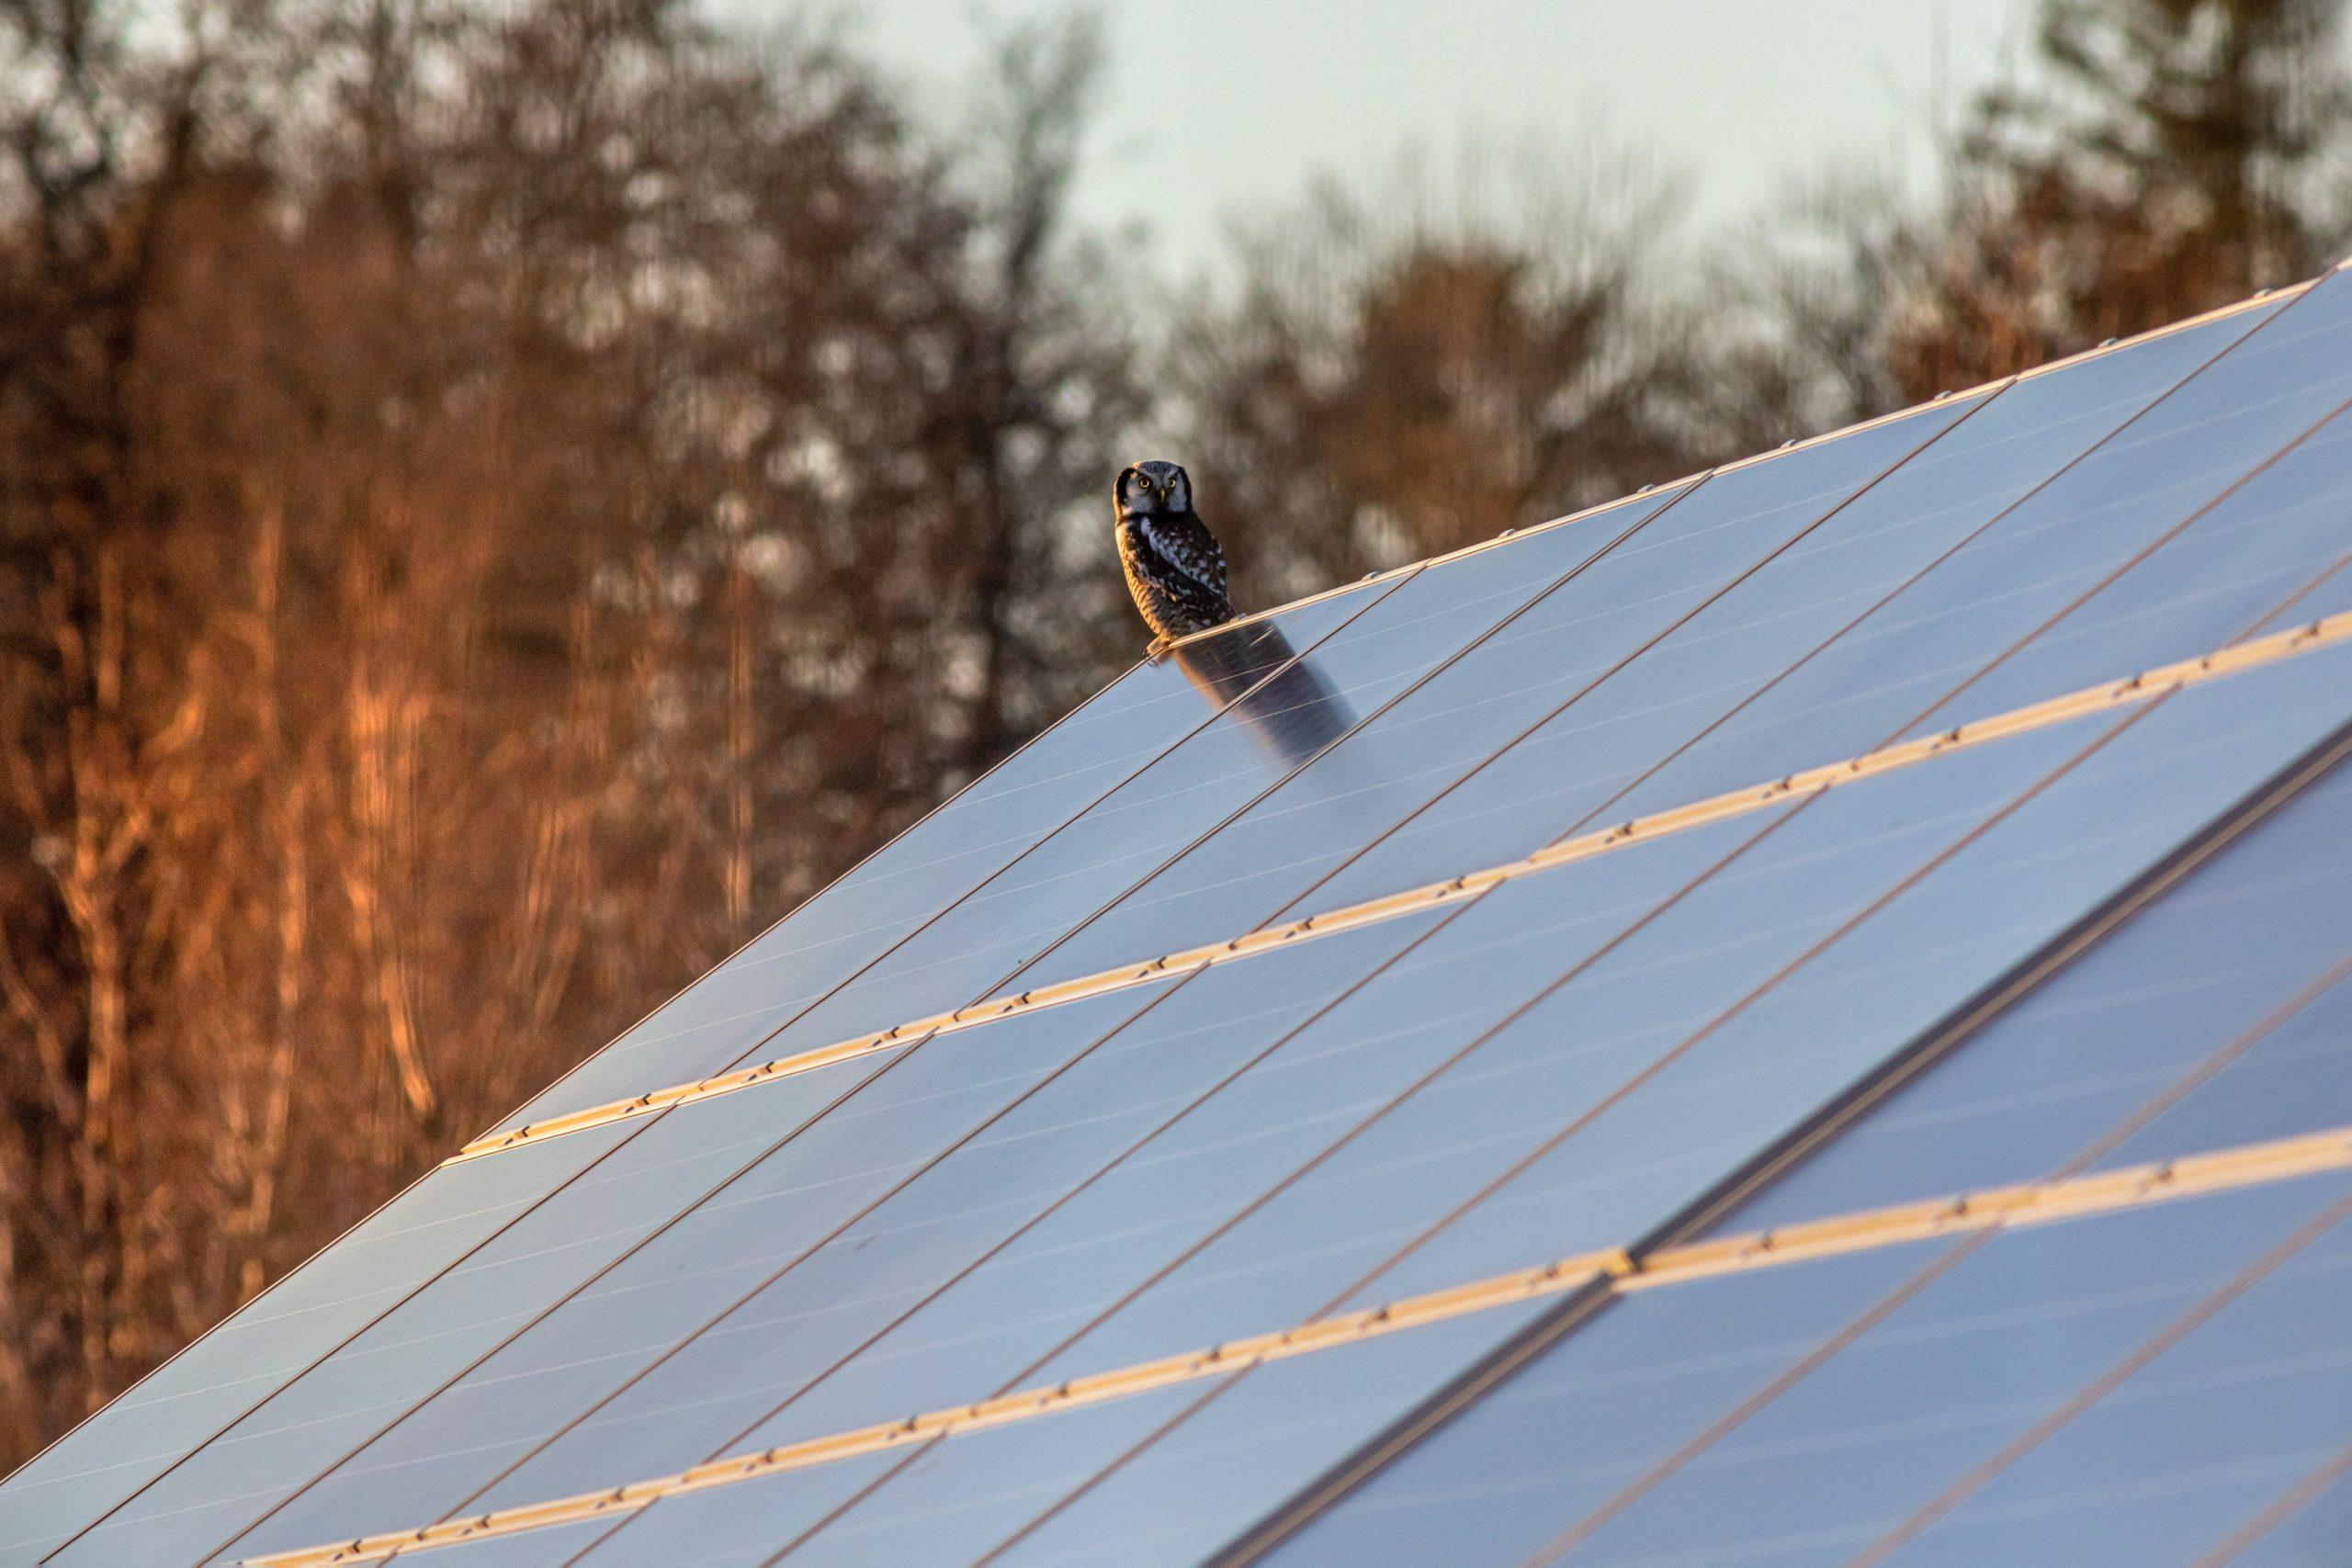 solar panel bird proofing